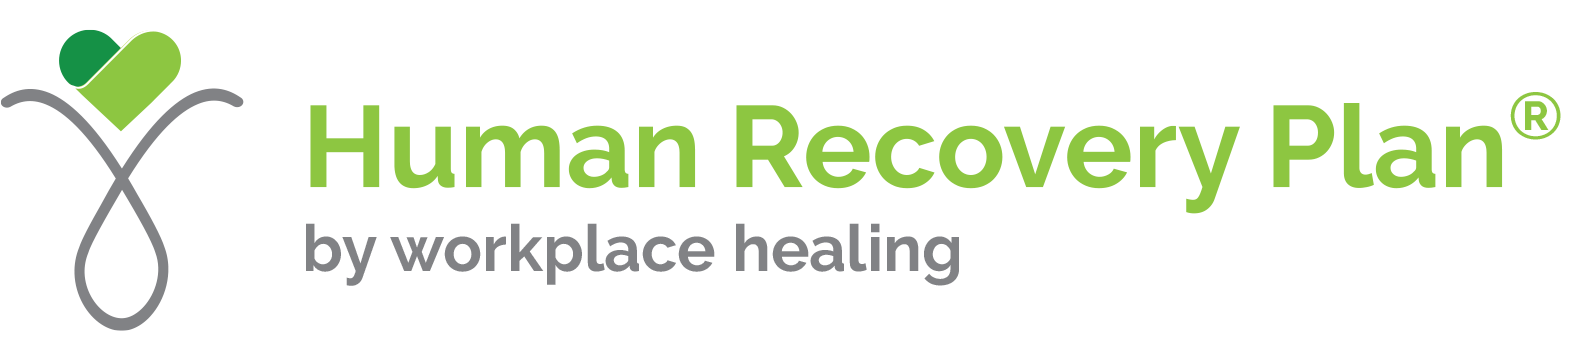 Workplace Healing - Human Recovery Plan™ Platform